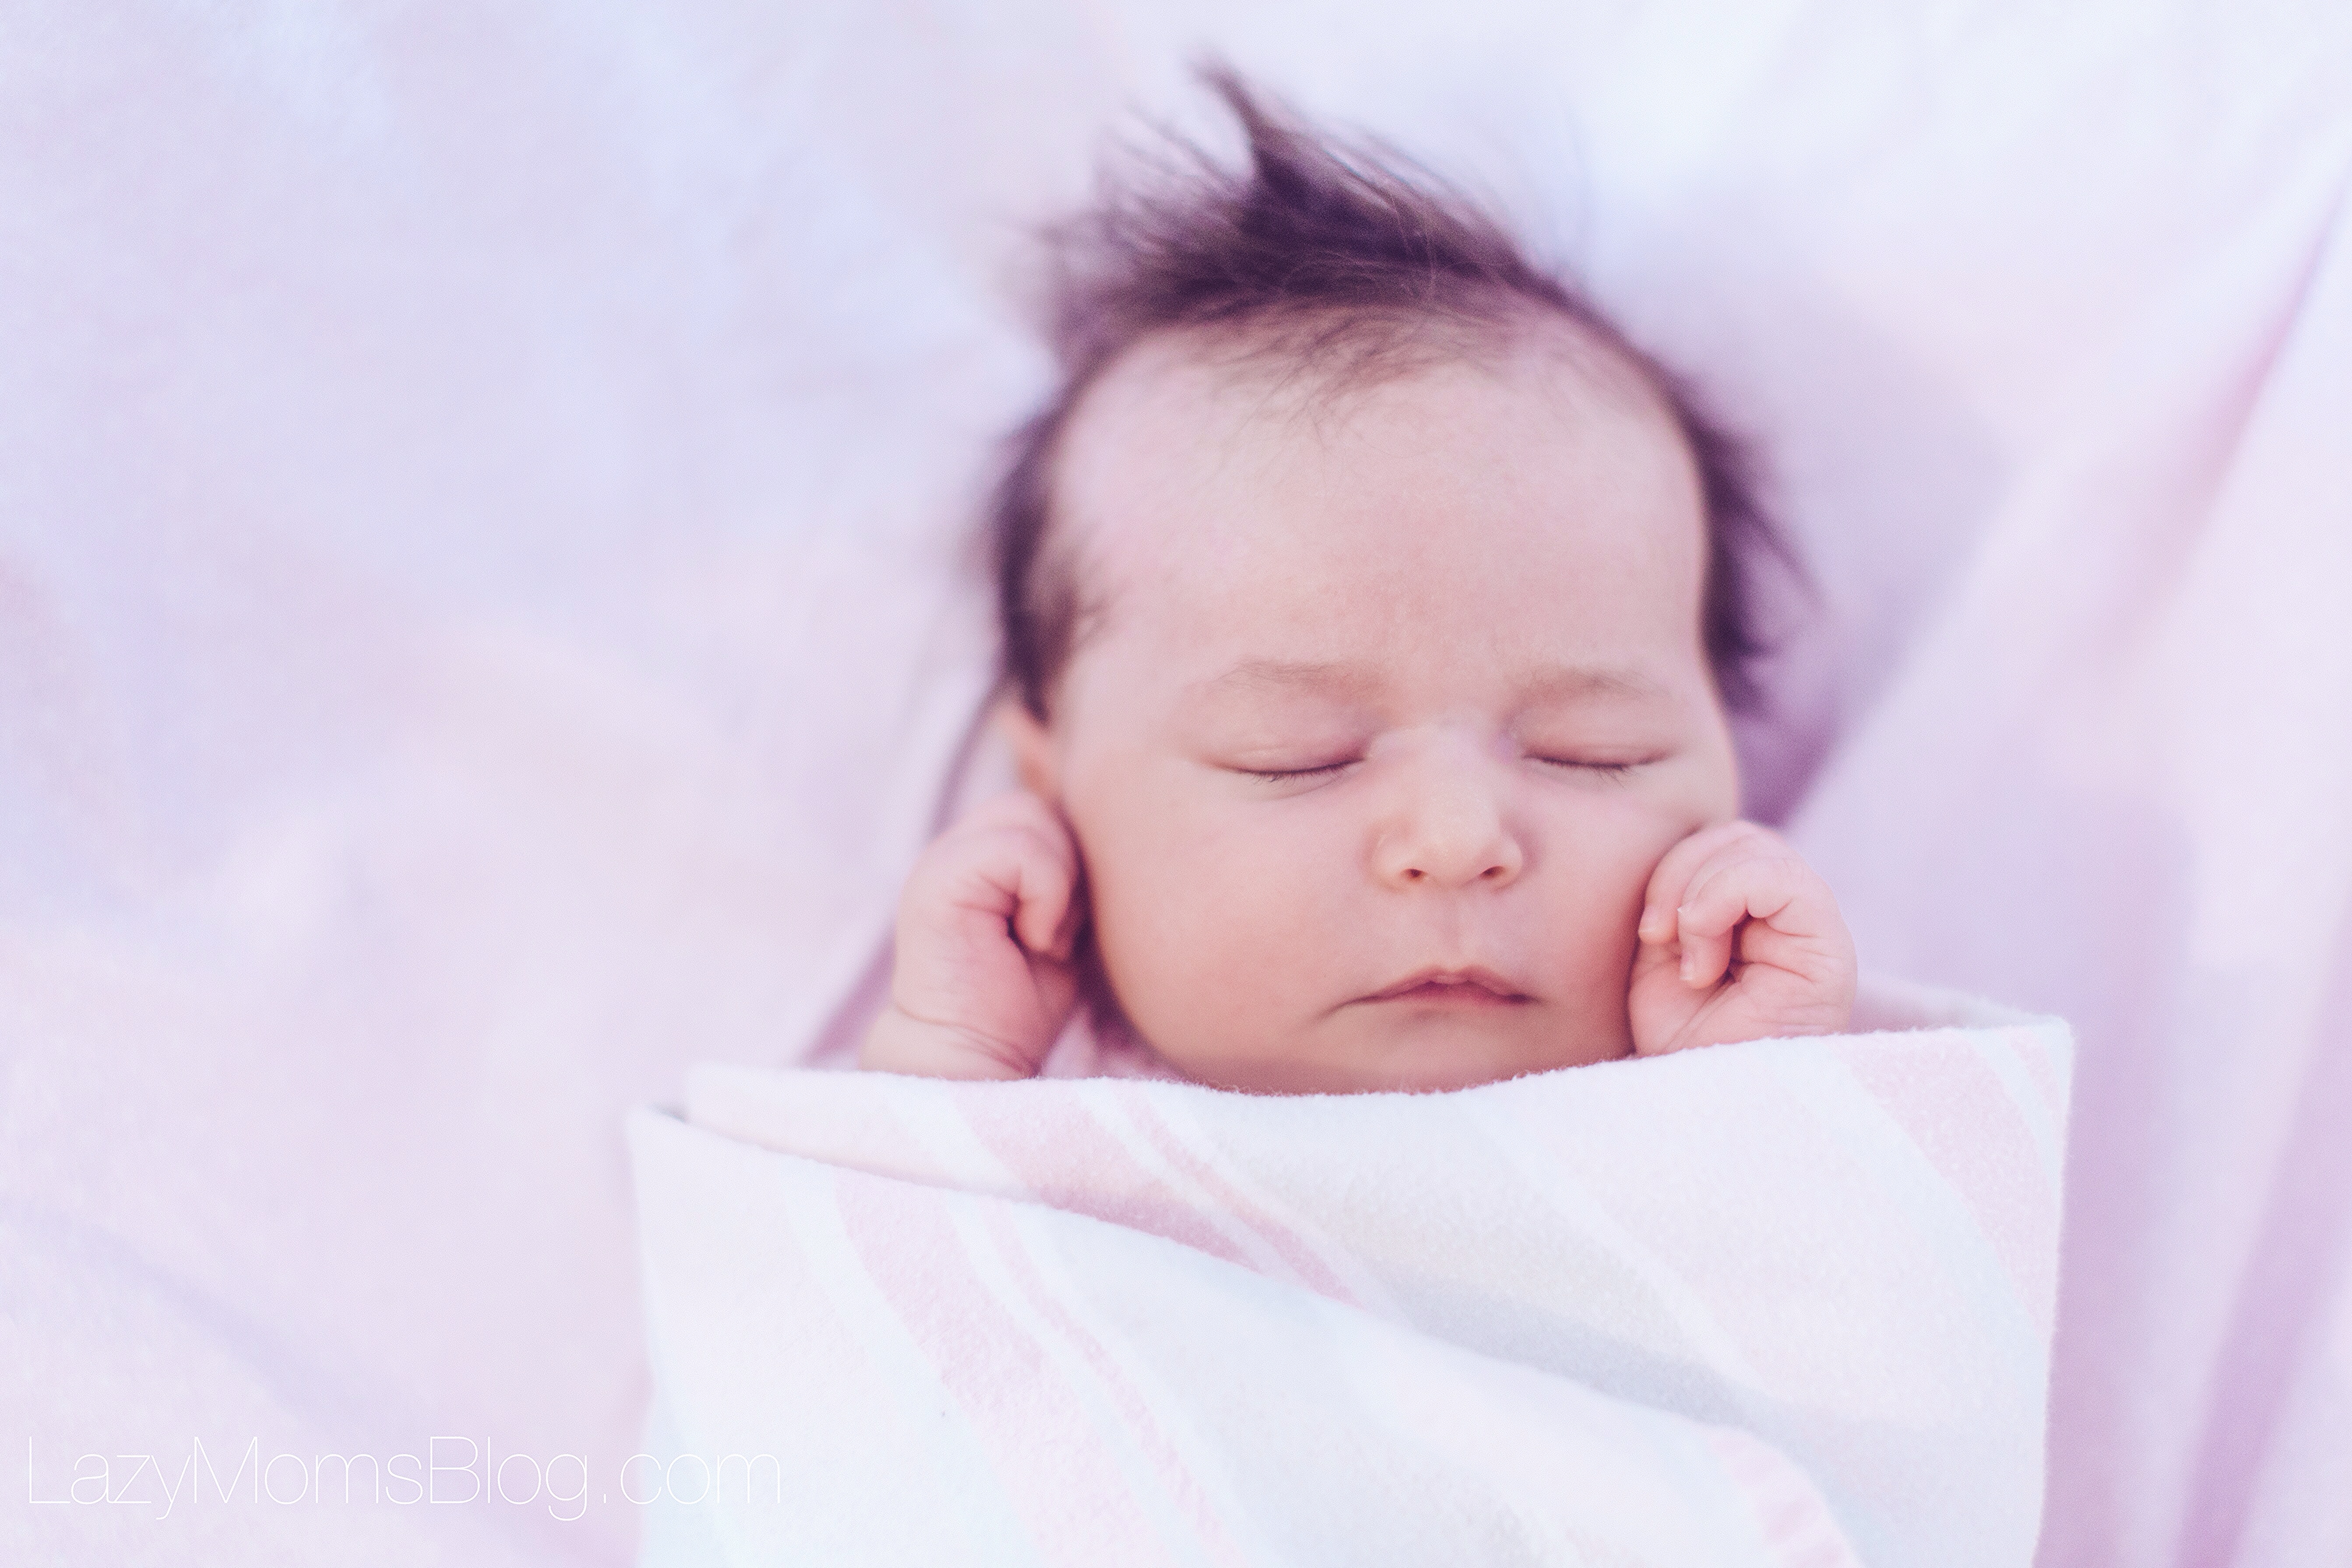 How to help babies sleep better